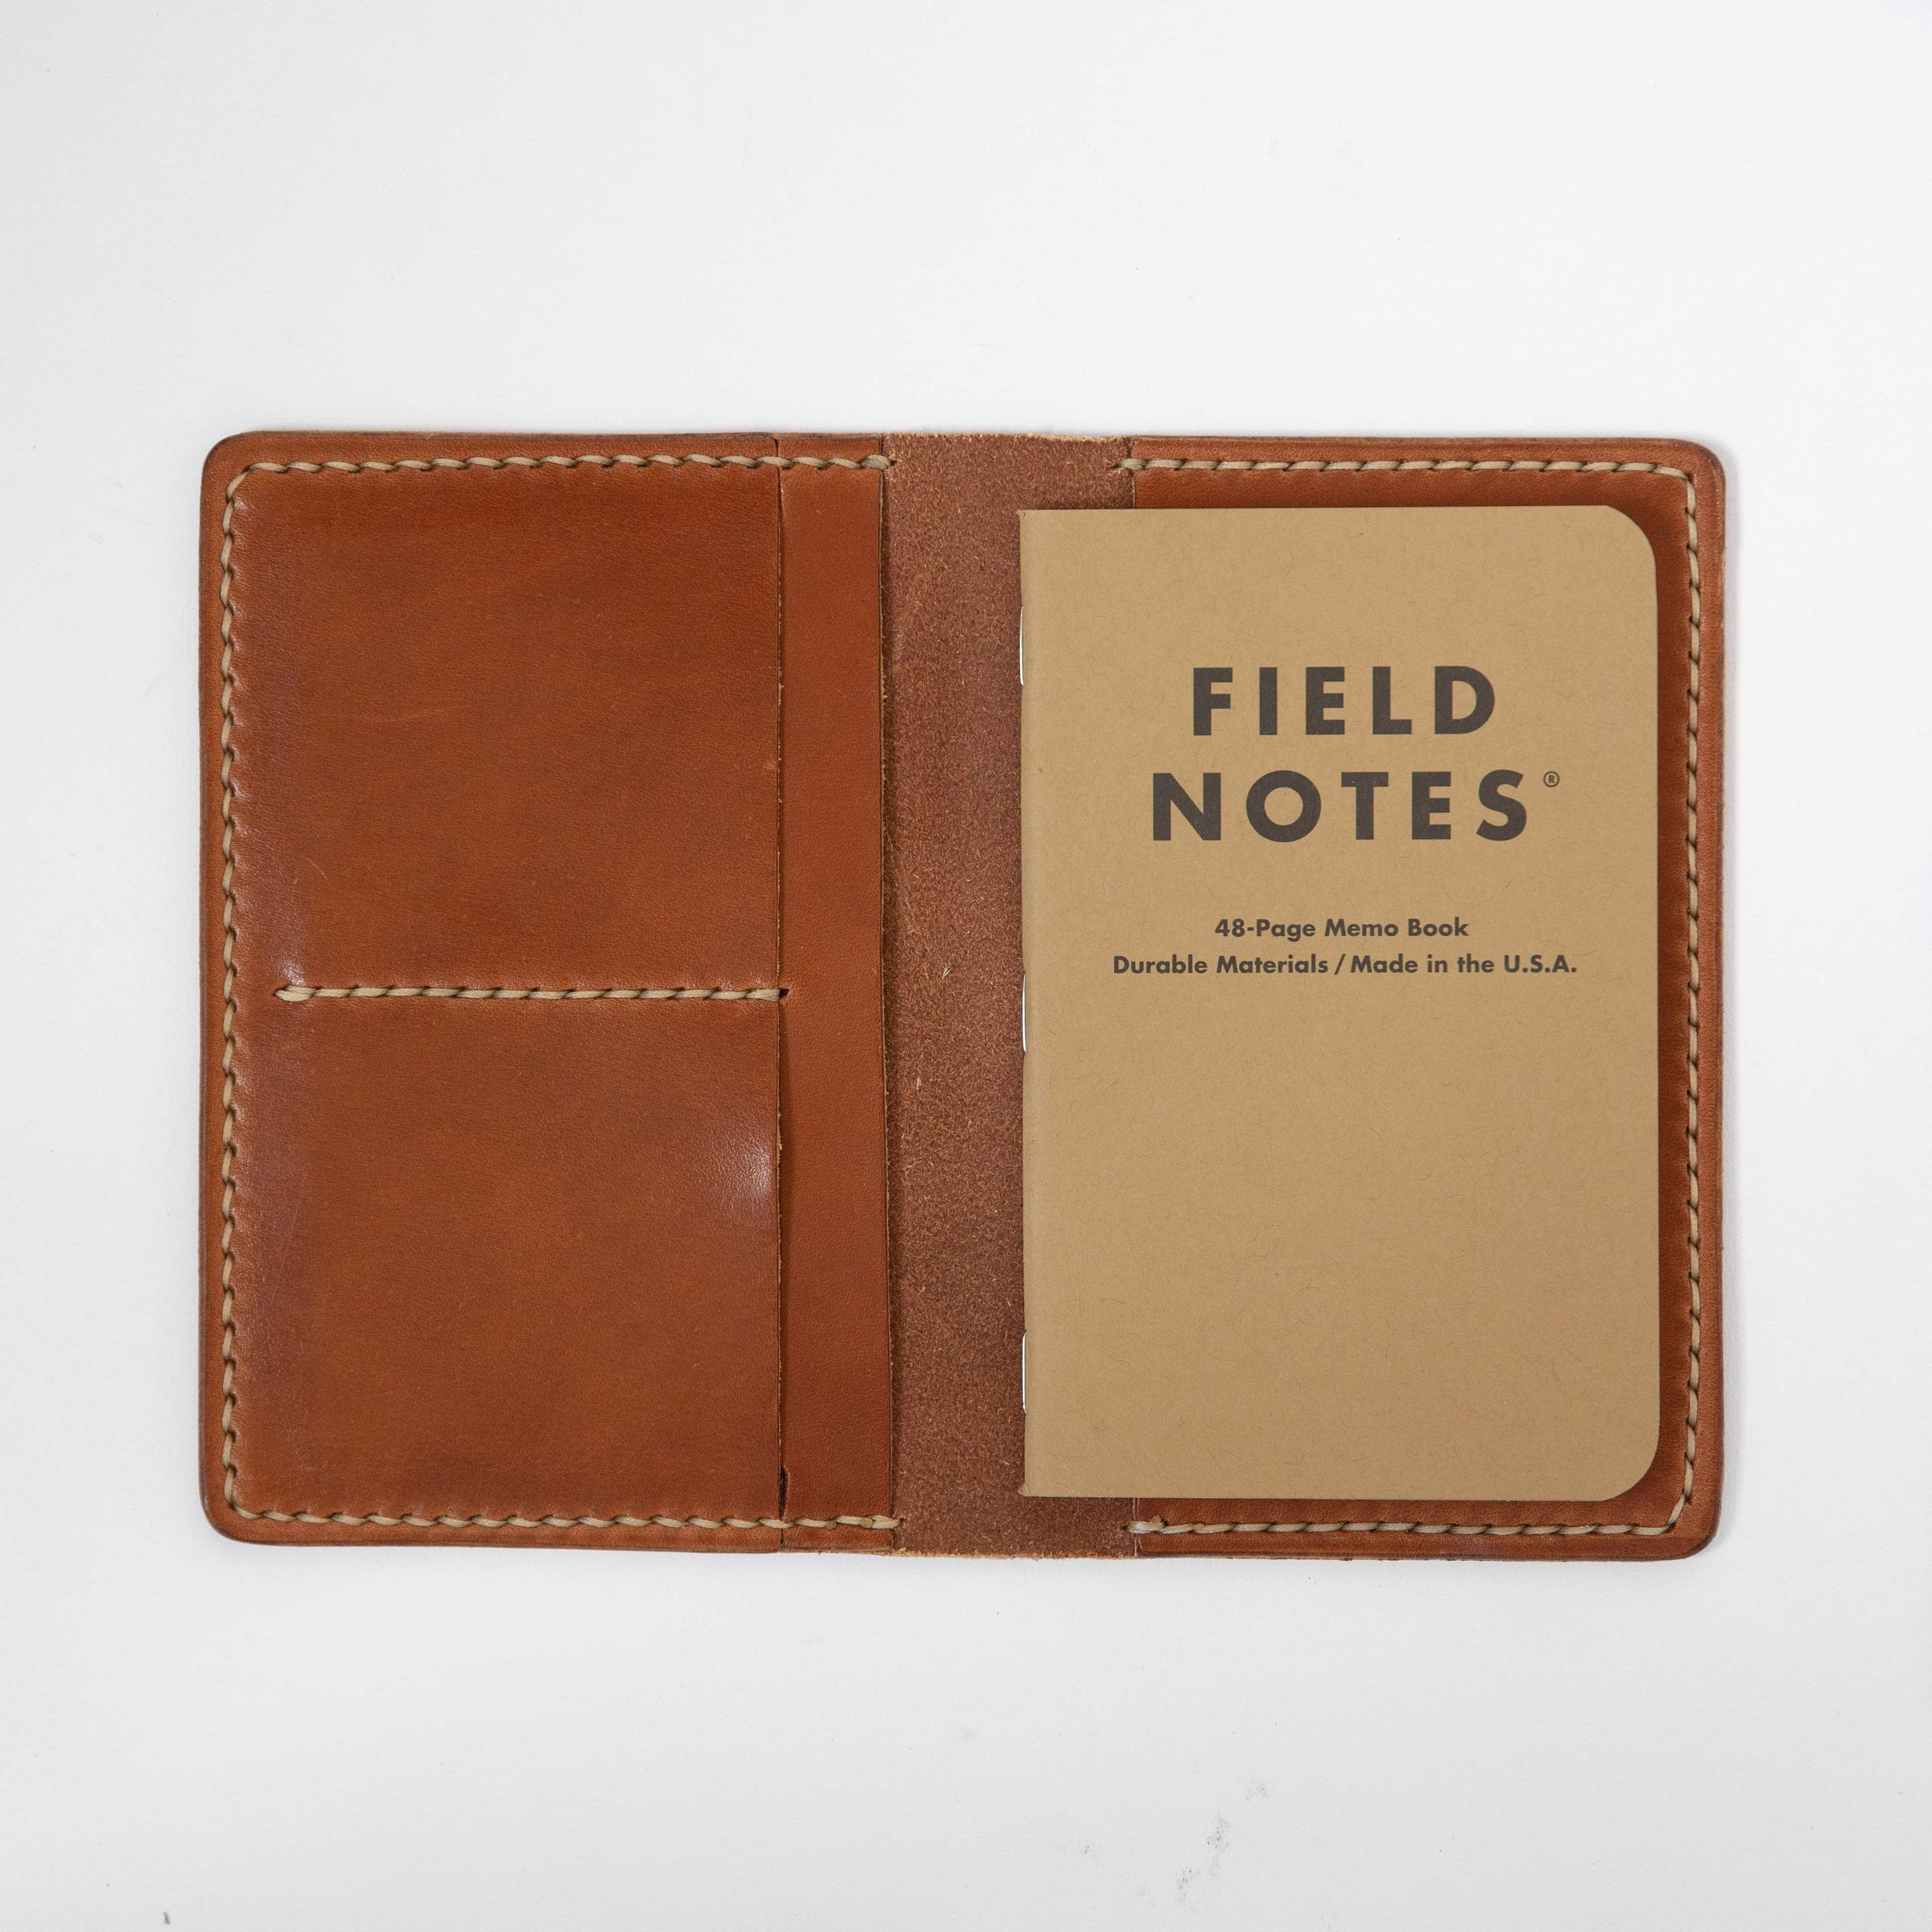 Buck Brown Notebook Wallet- leather notebook cover - passport holder - KMM &amp; Co.